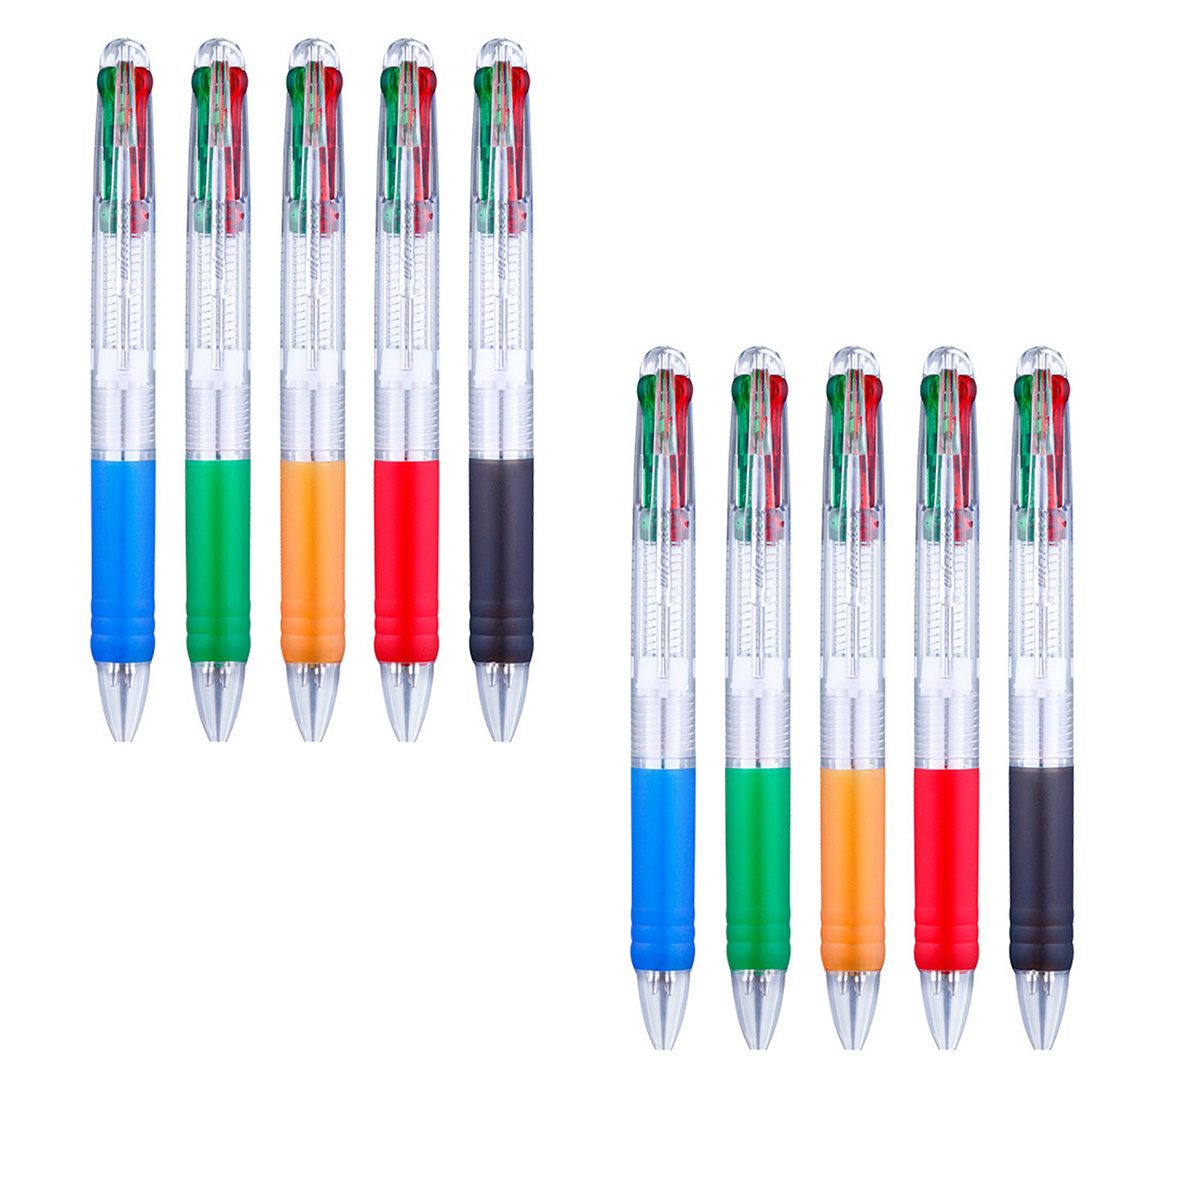  Favourde: 22 bolígrafos multicolor 6 en 1 de 0.020 pulgadas, 6  colores de bolígrafos retráctiles para suministros escolares, de oficina,  regalo para niños. : Productos de Oficina